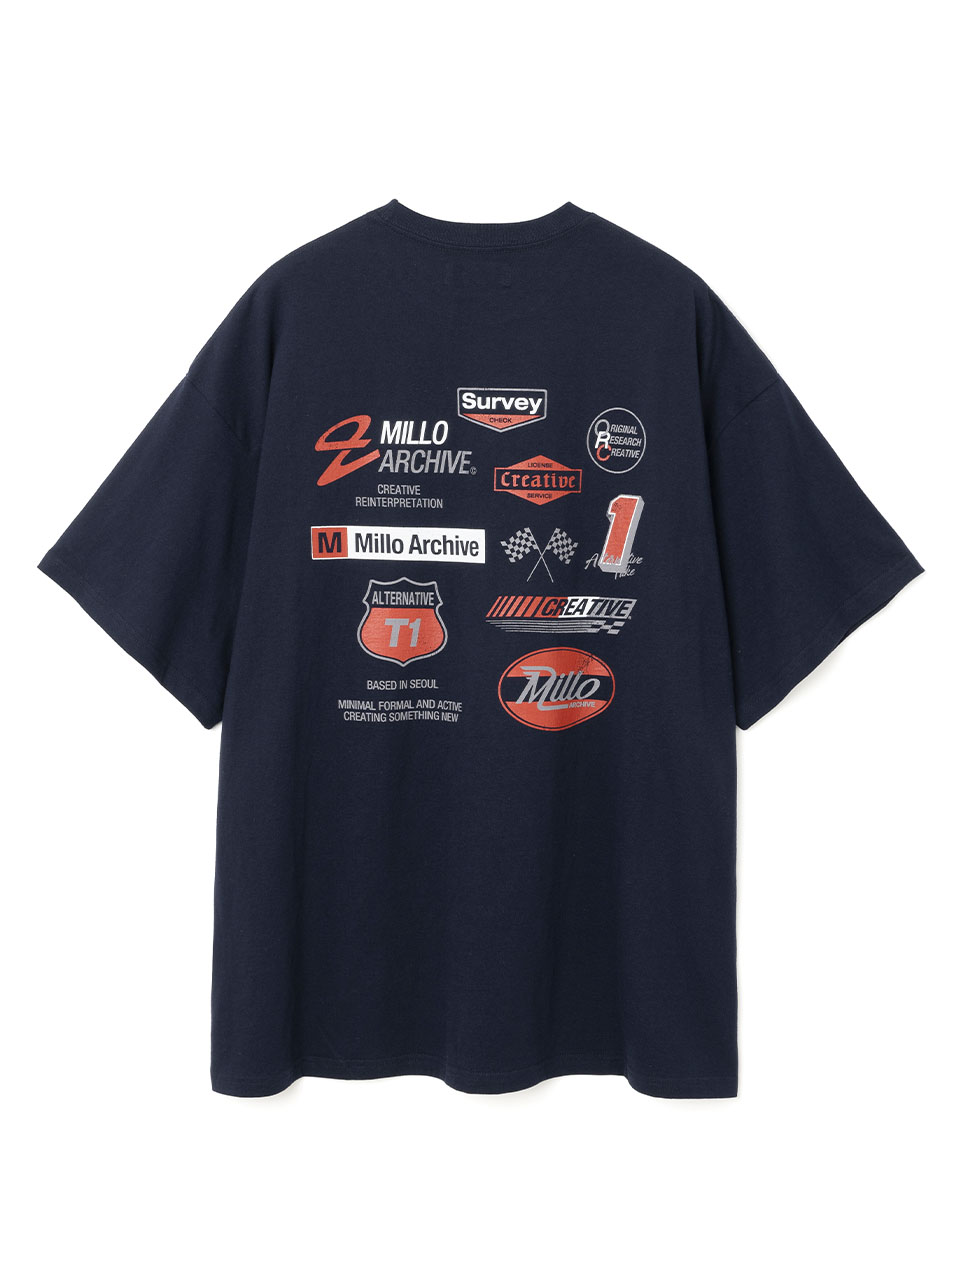 Racing Graphic T-Shirts [Navy]